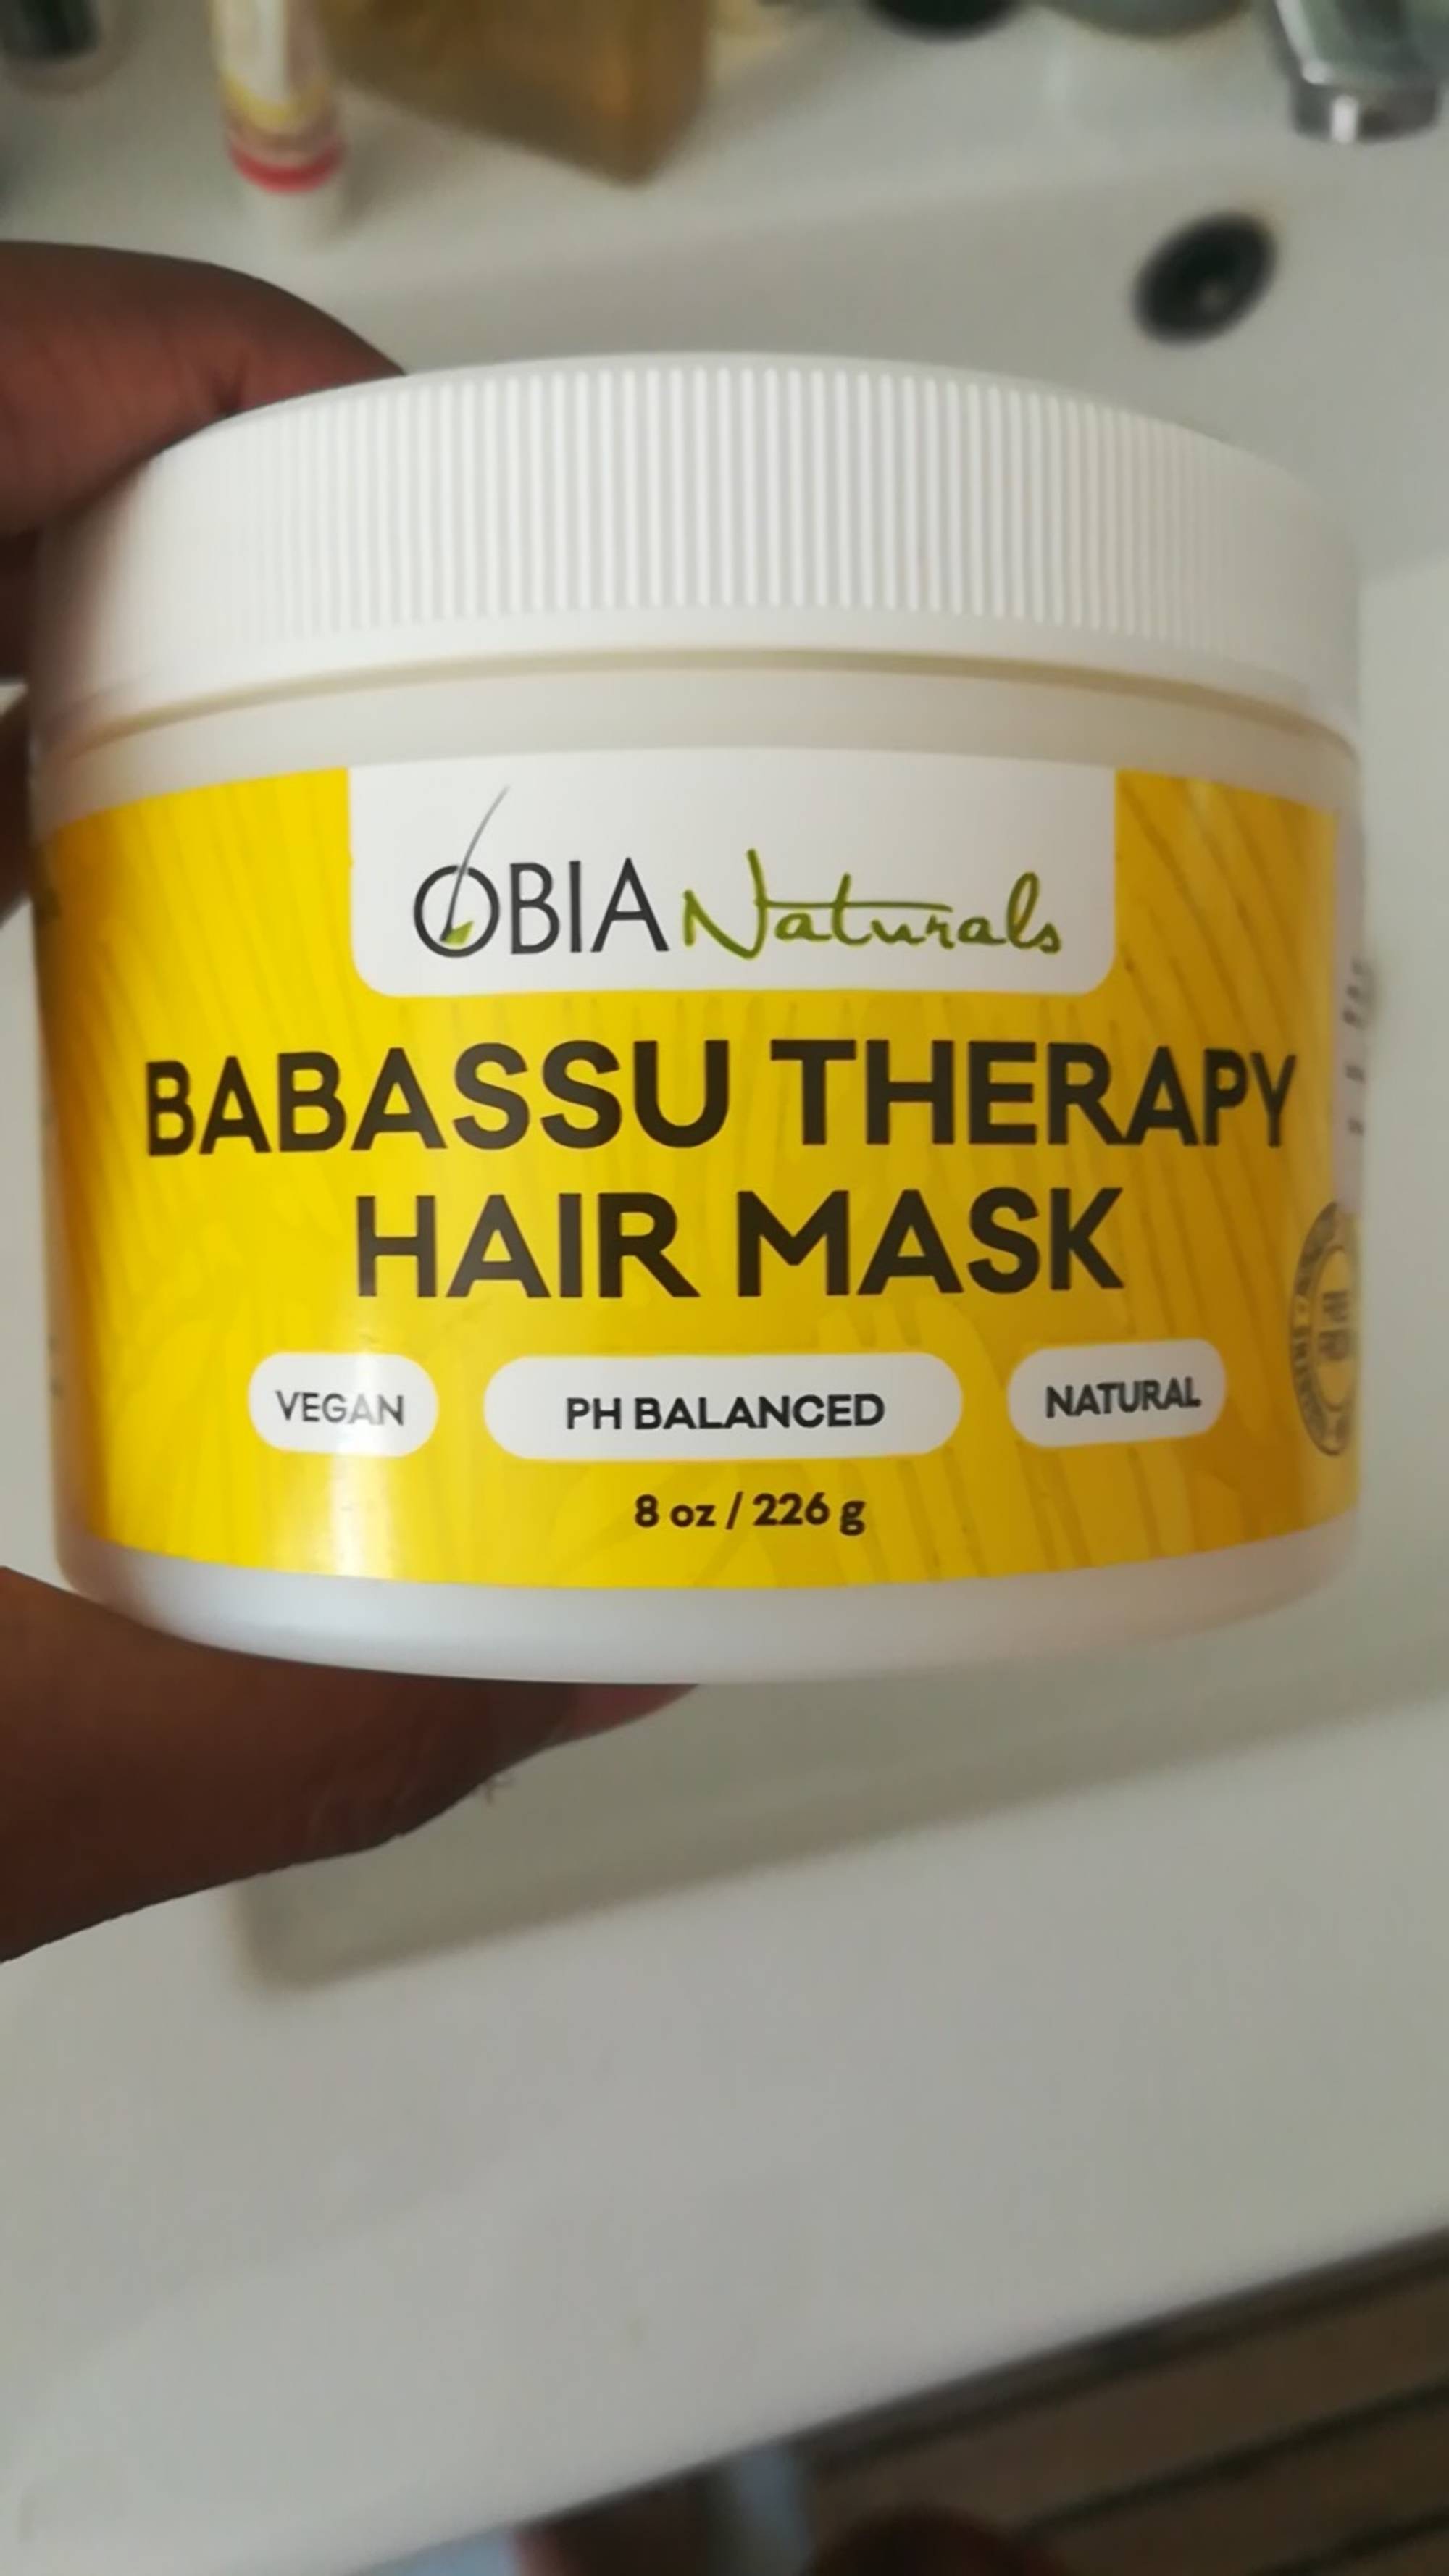 OBIA NATURALS - Babassu therapy - Hair mask